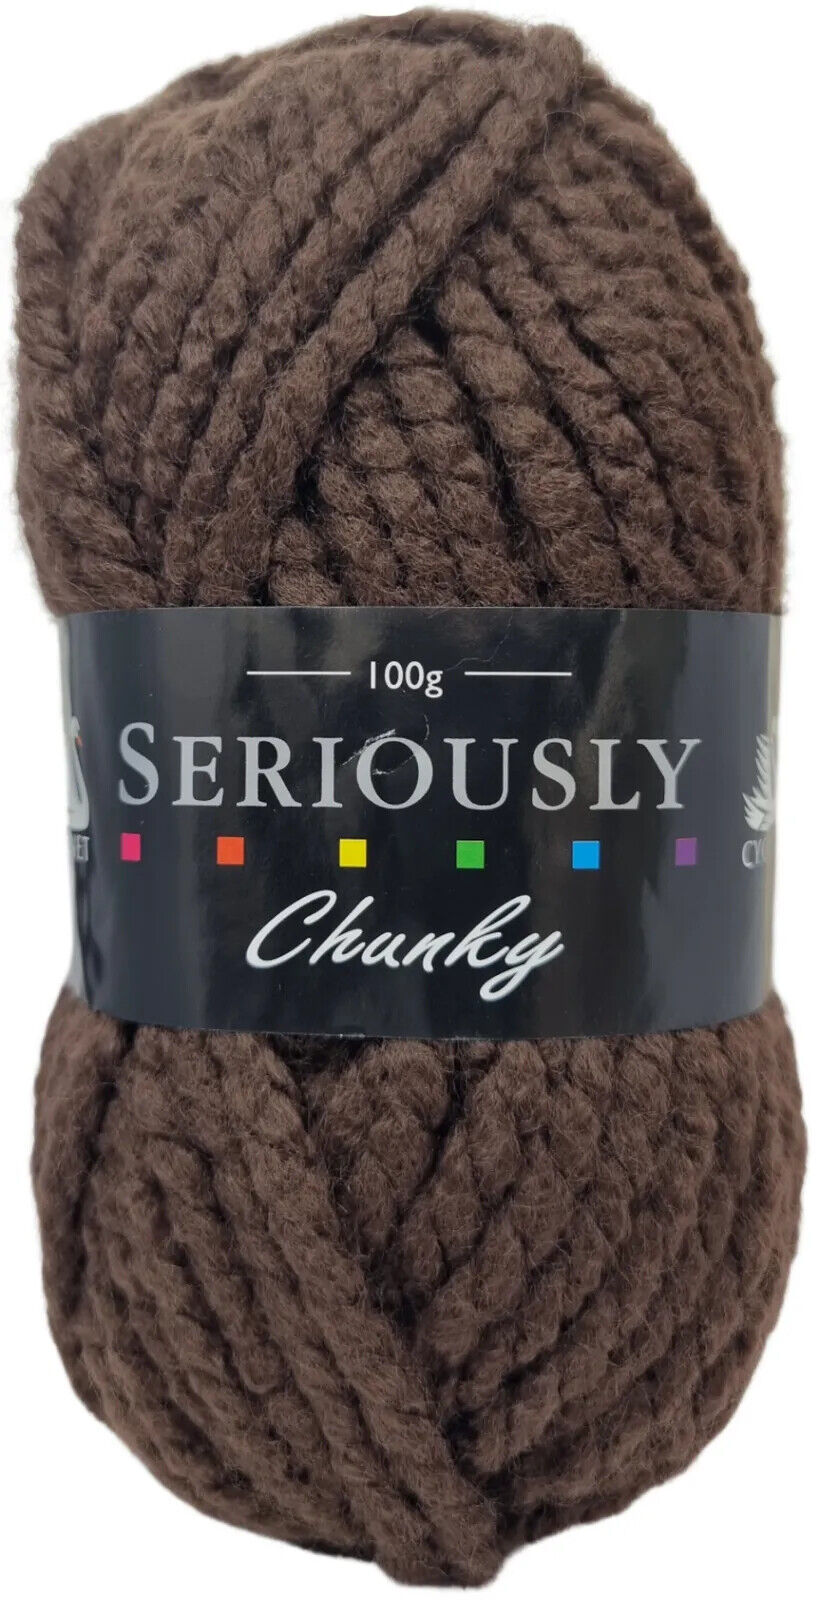 Cygnet SERIOUSLY CHUNKY Plains - Chocolate 3583 Knitting Yarn